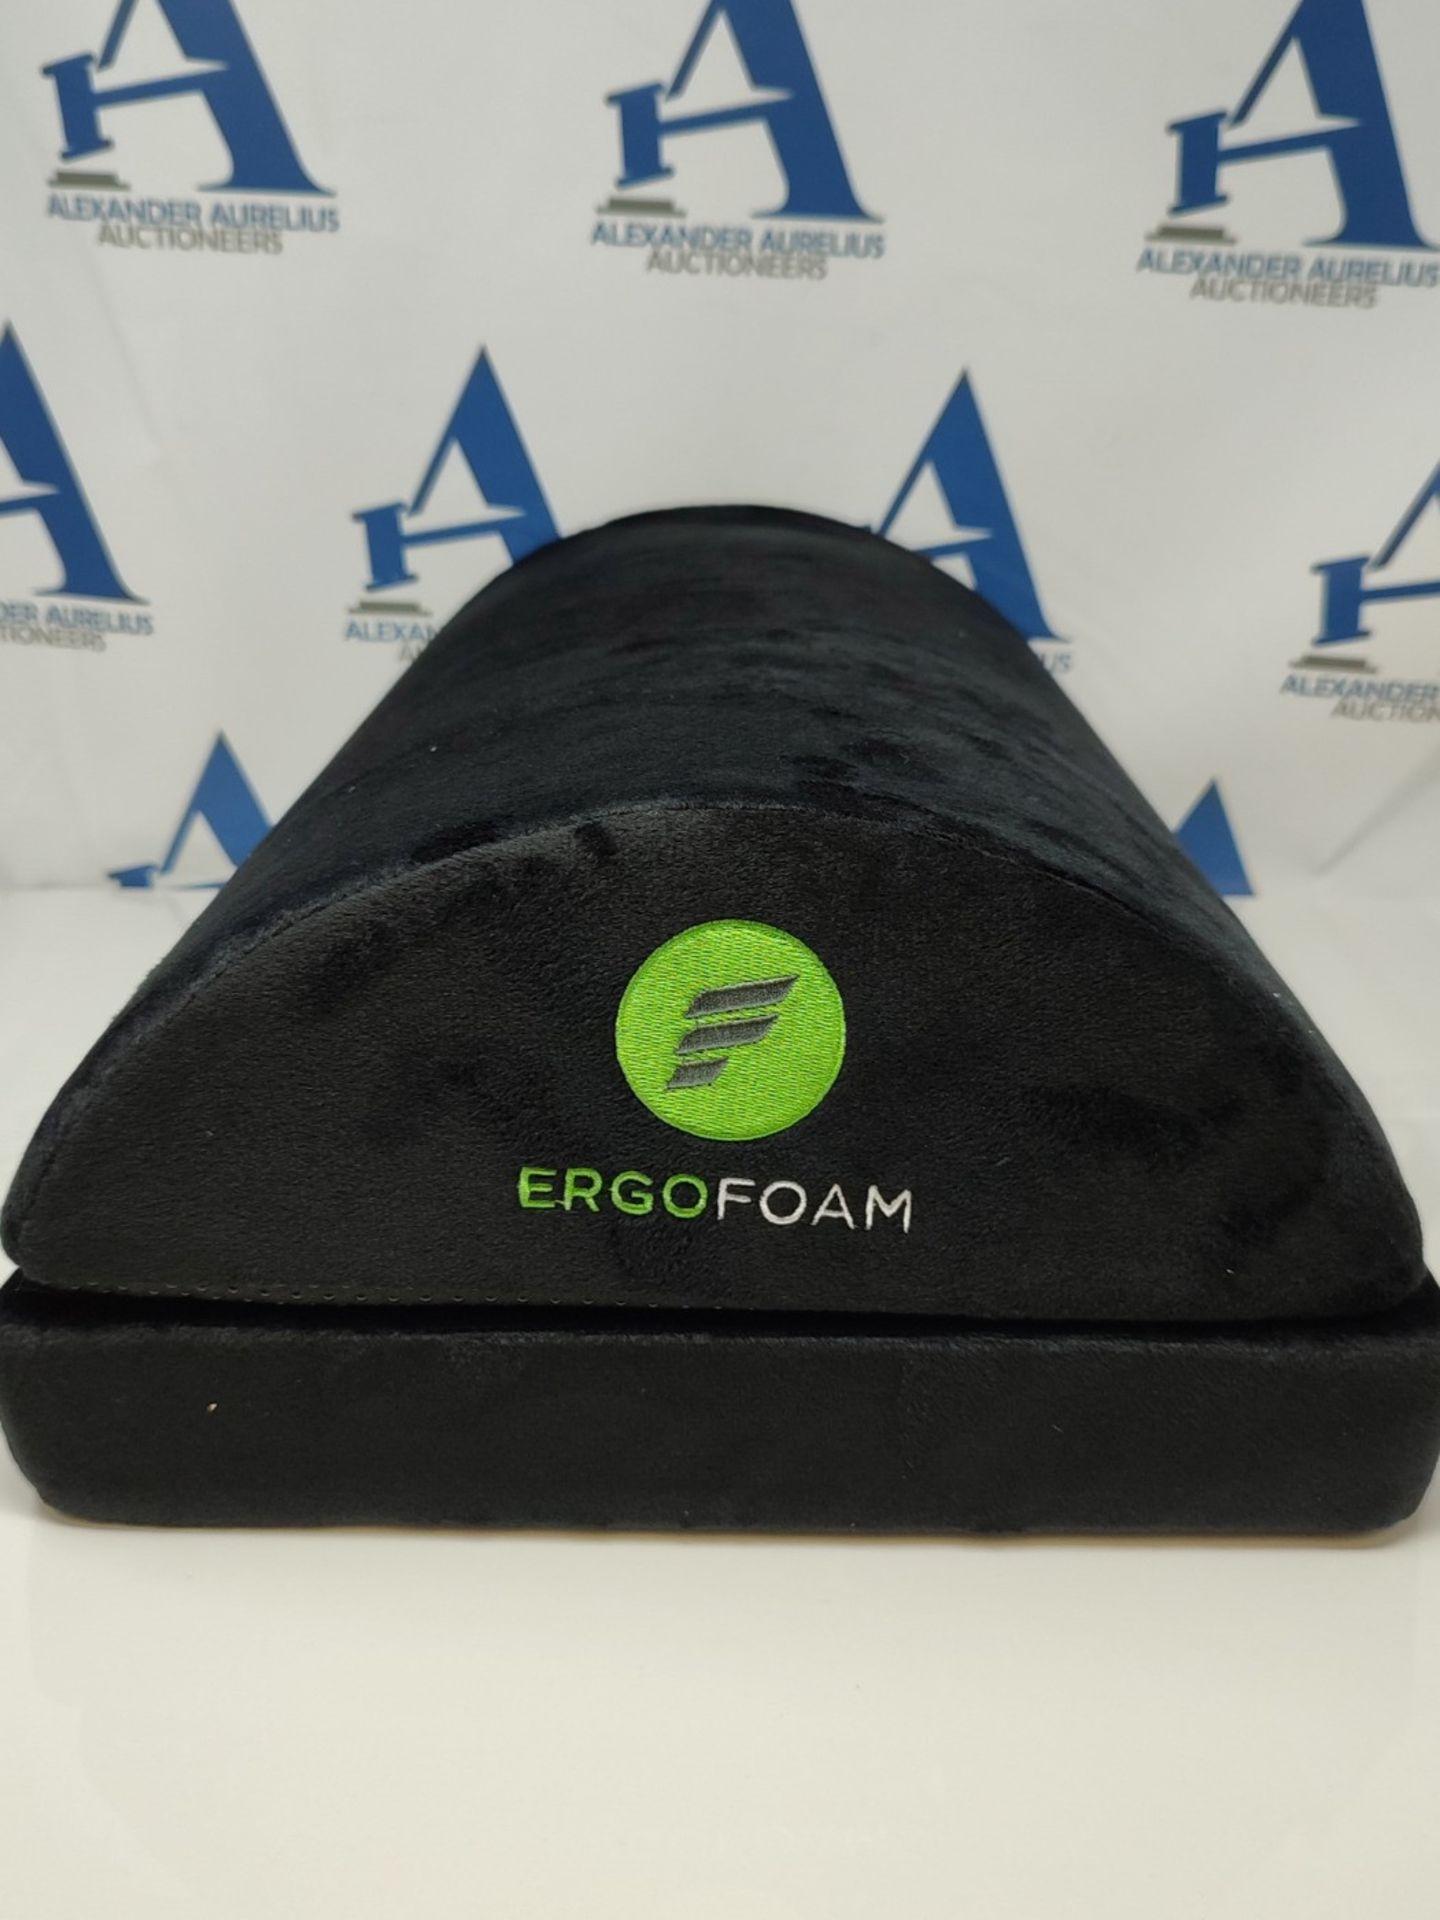 ErgoFoam Foot Rest for Under Desk at Work Chiropractor-Endorsed Orthopedic Teardrop De